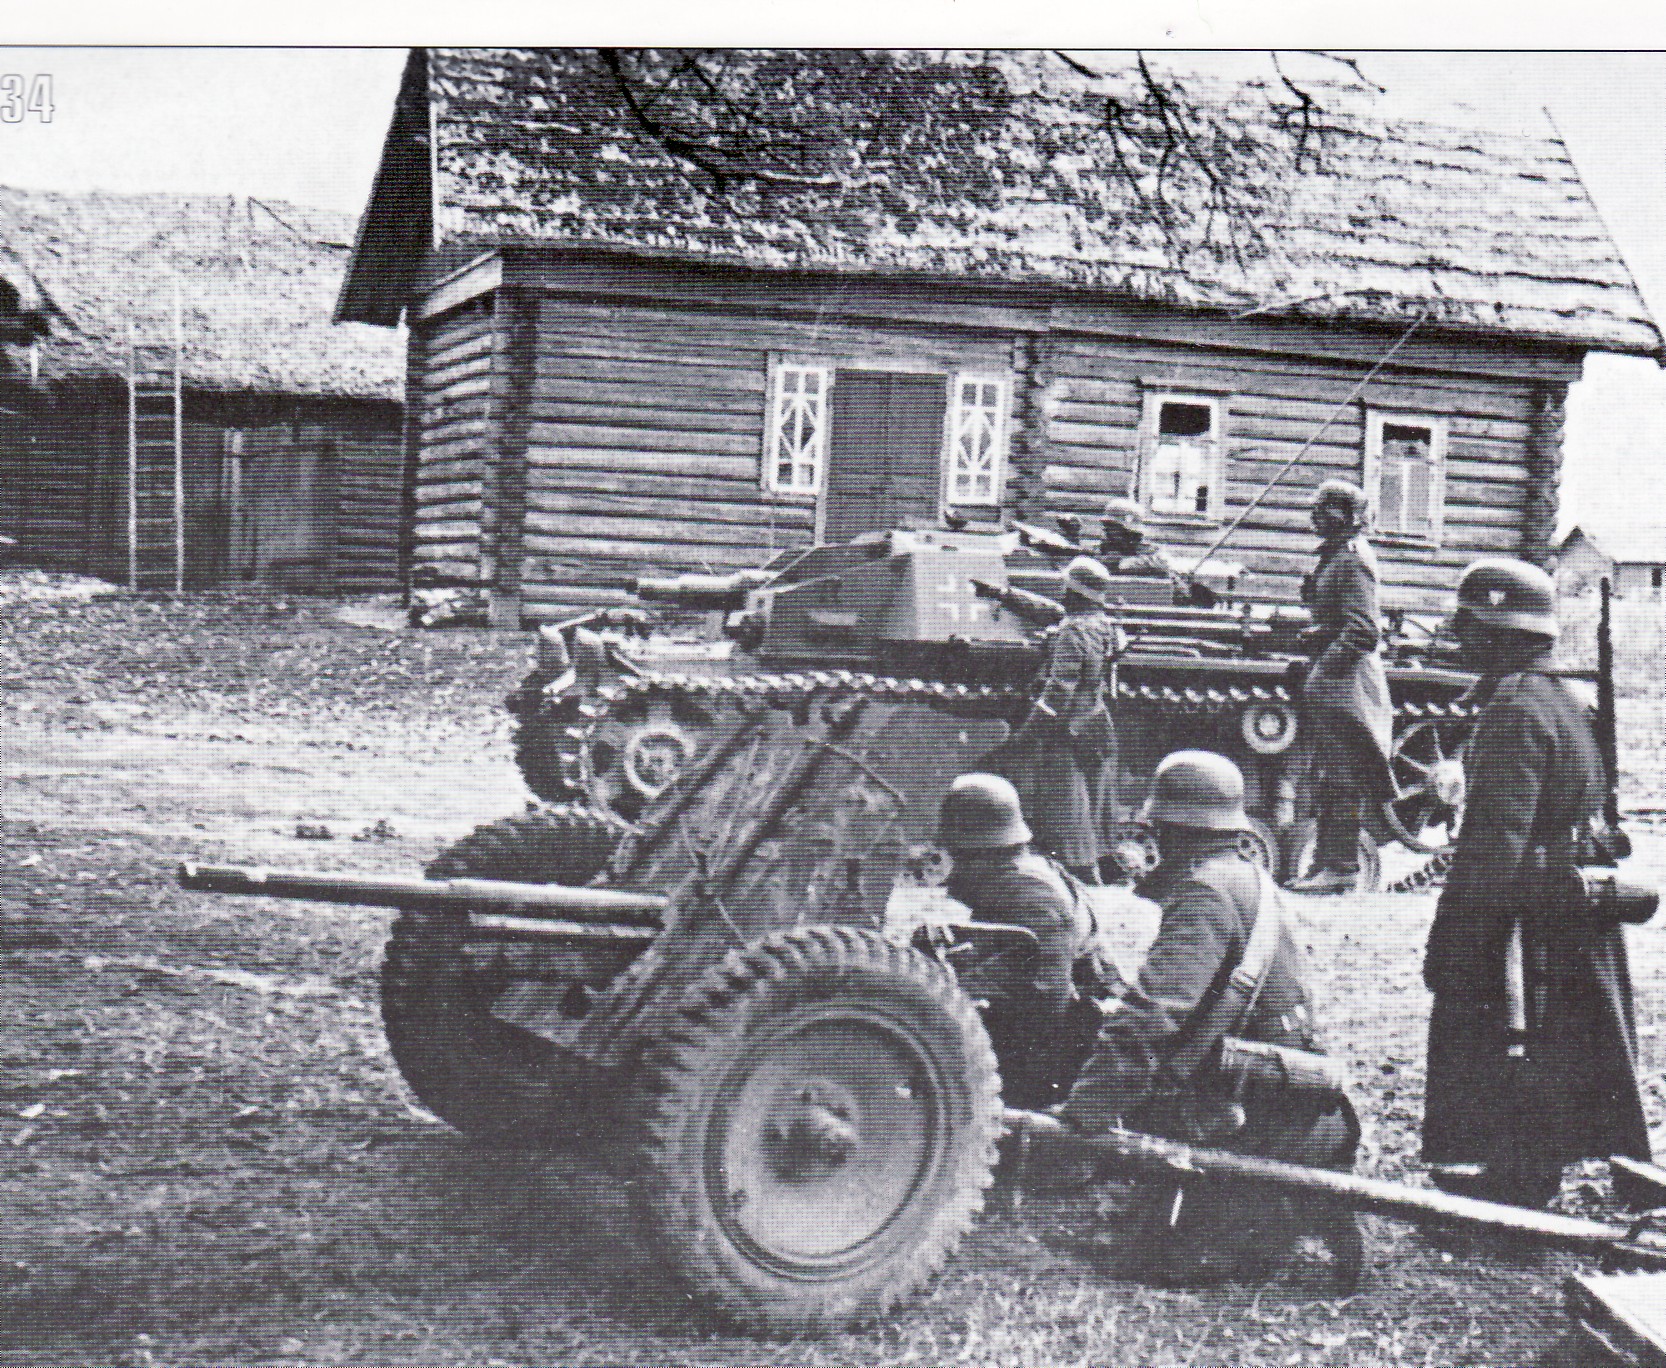 ПТО немцев. 36-мм пушка и StjG-III